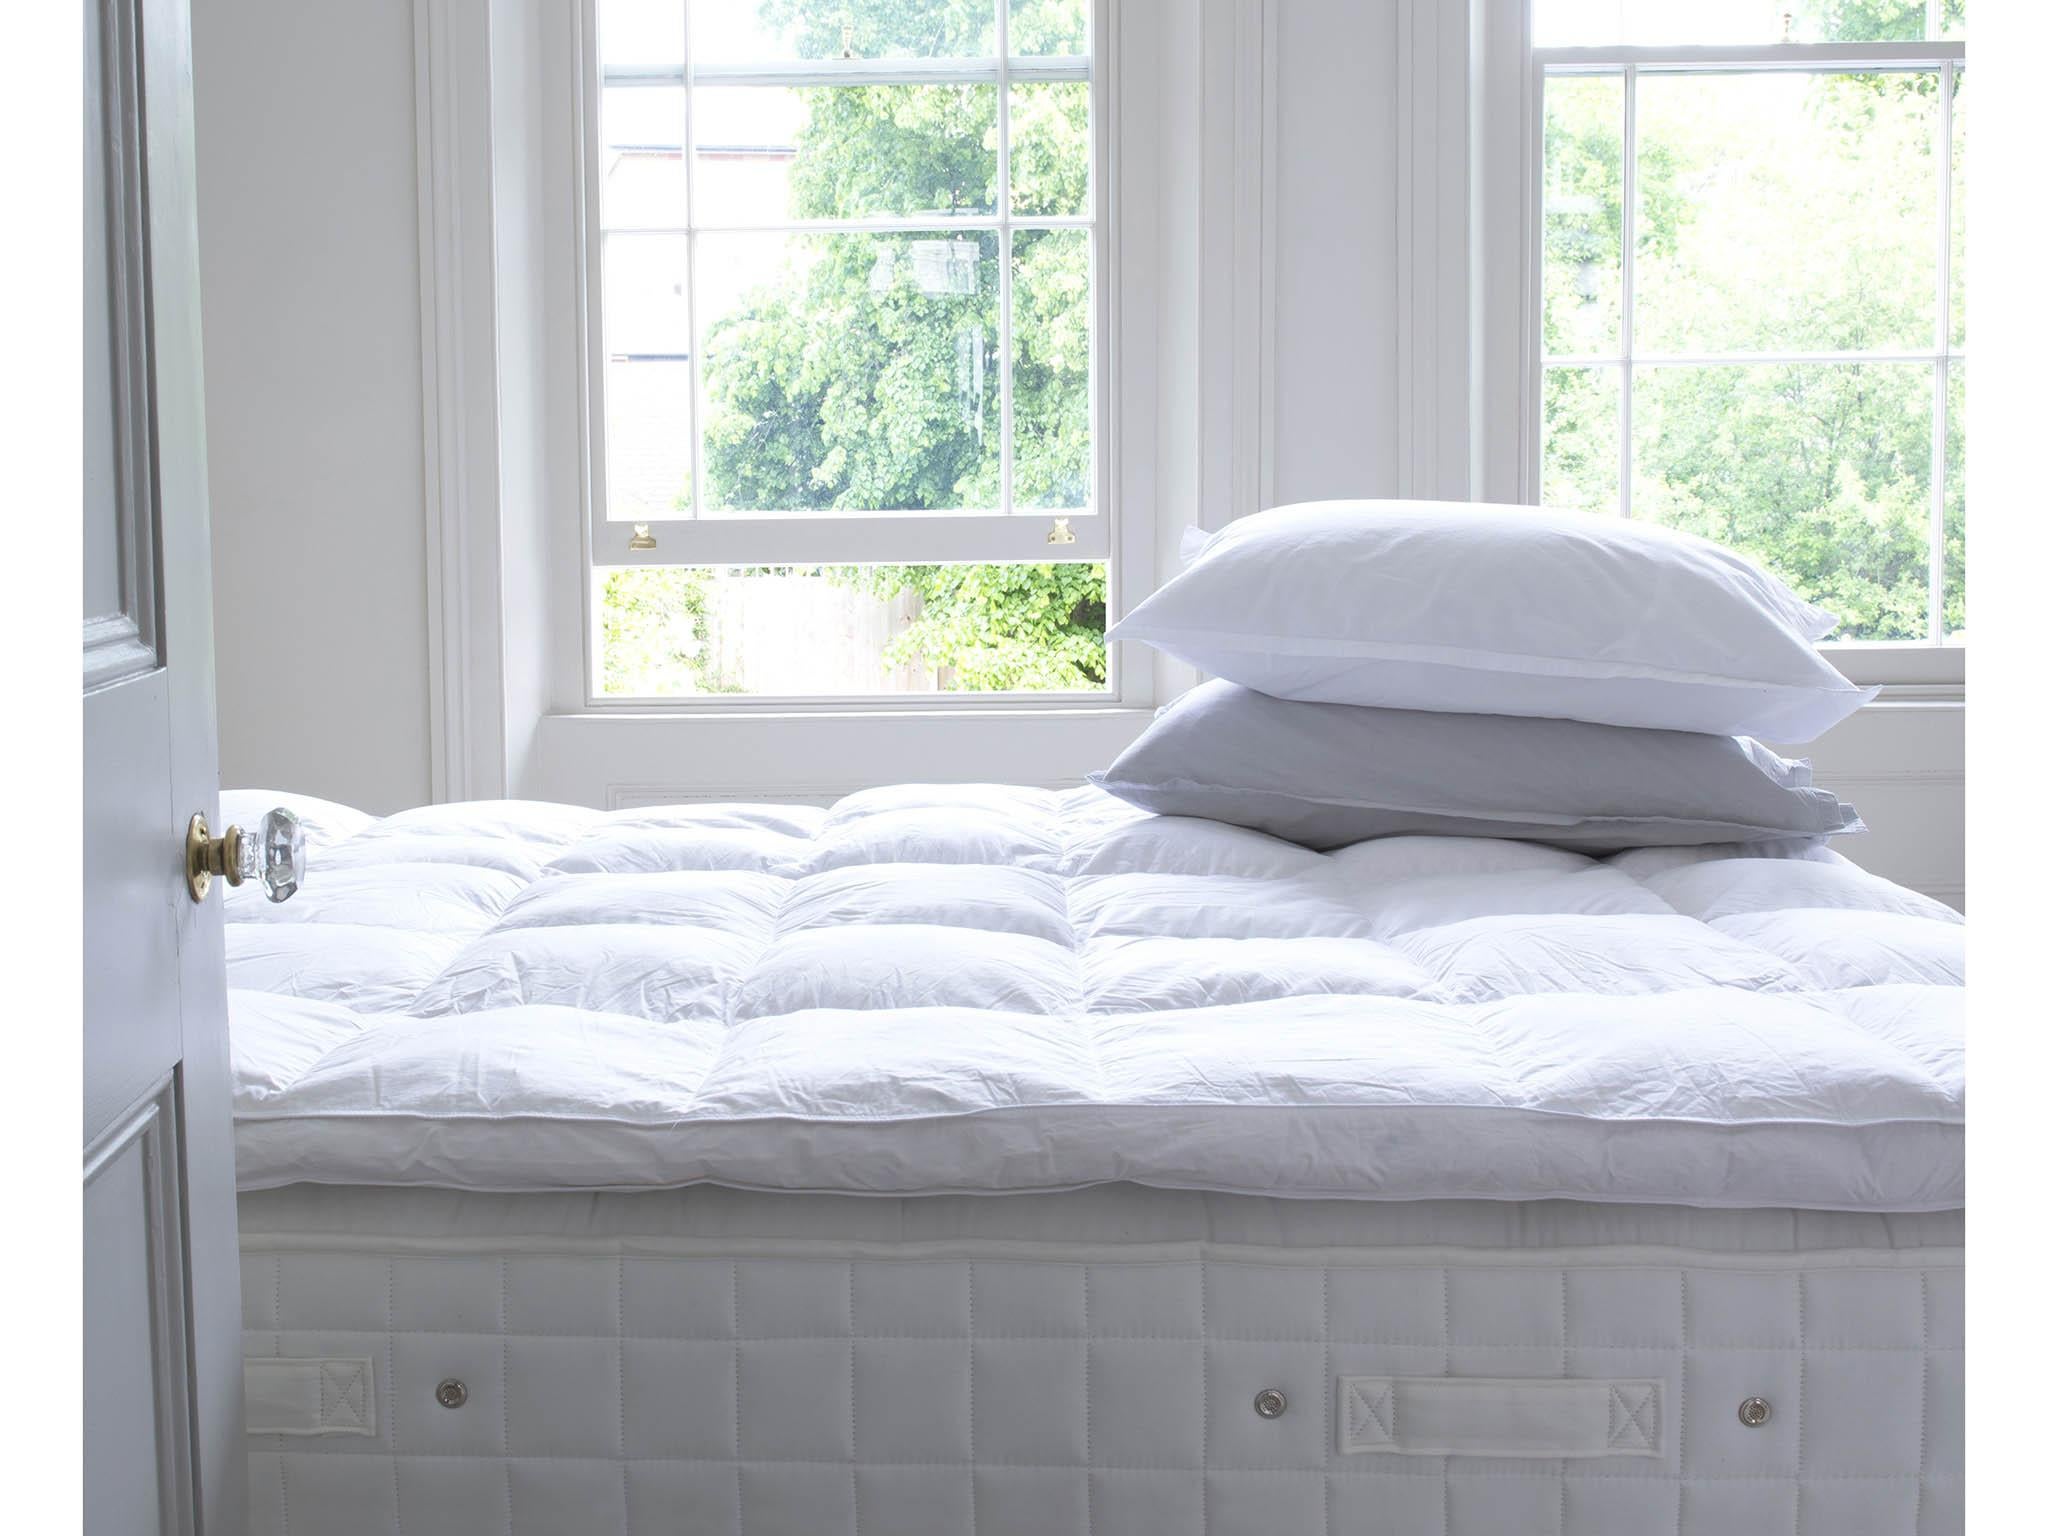 cot bed mattress topper uk